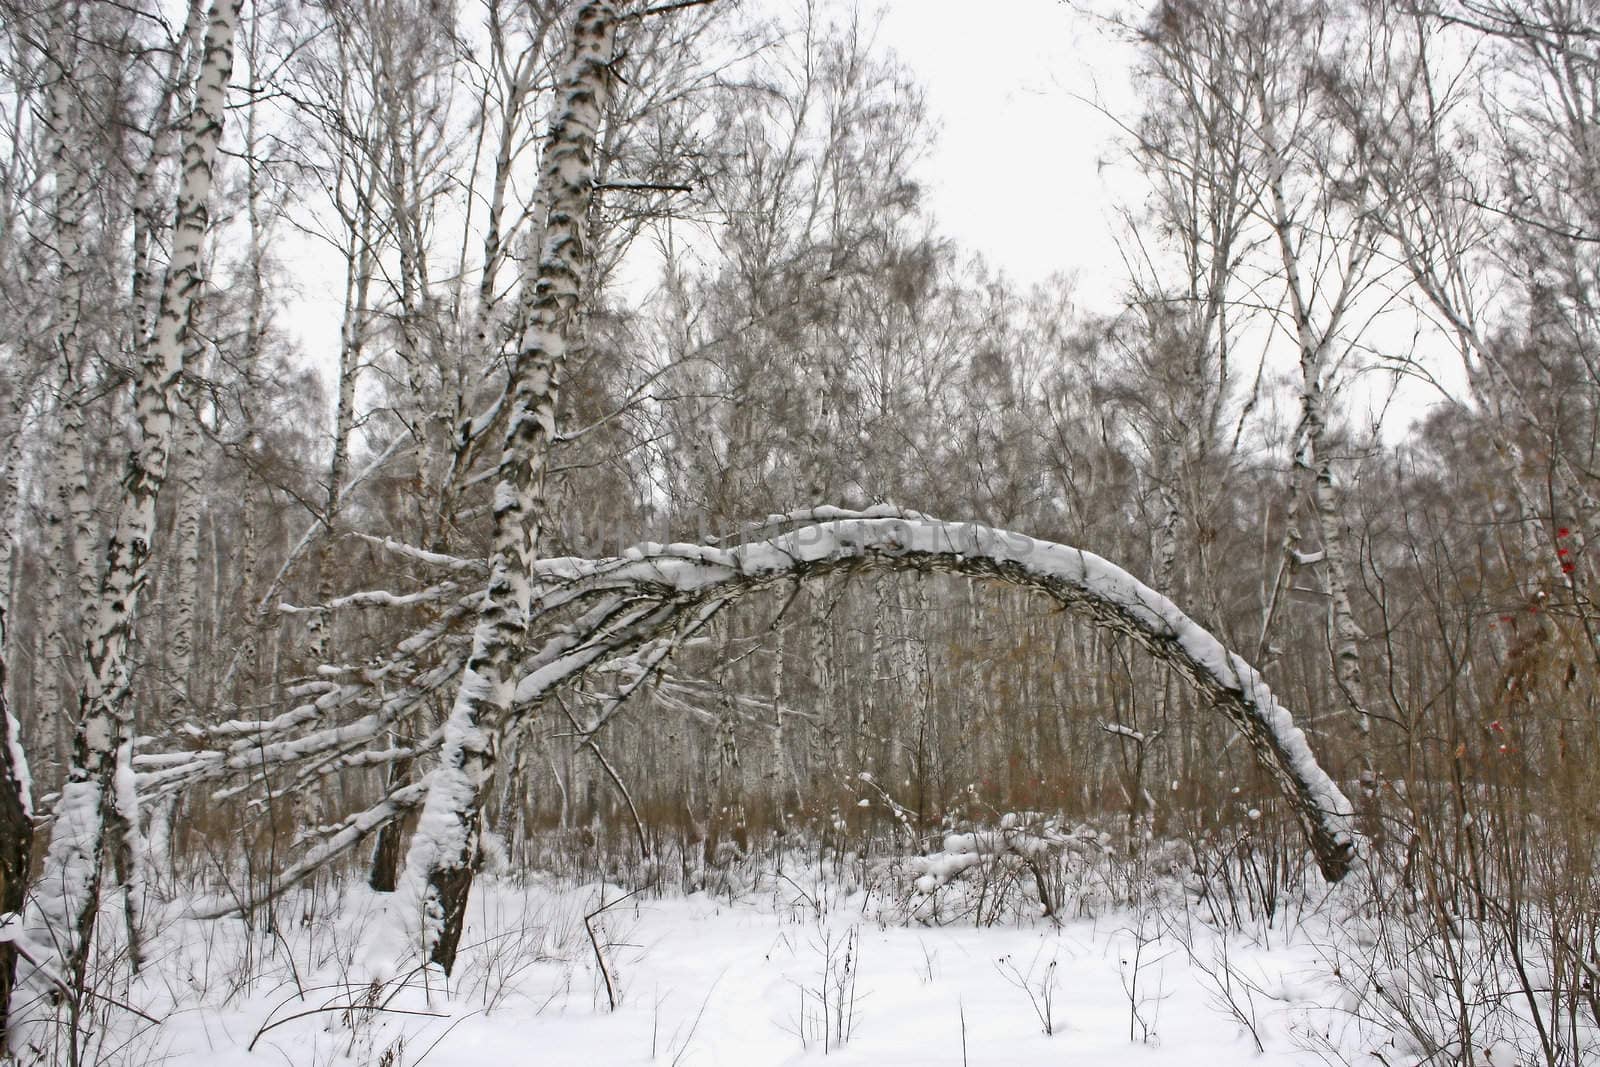 Beautiful winter  forest  under snow.